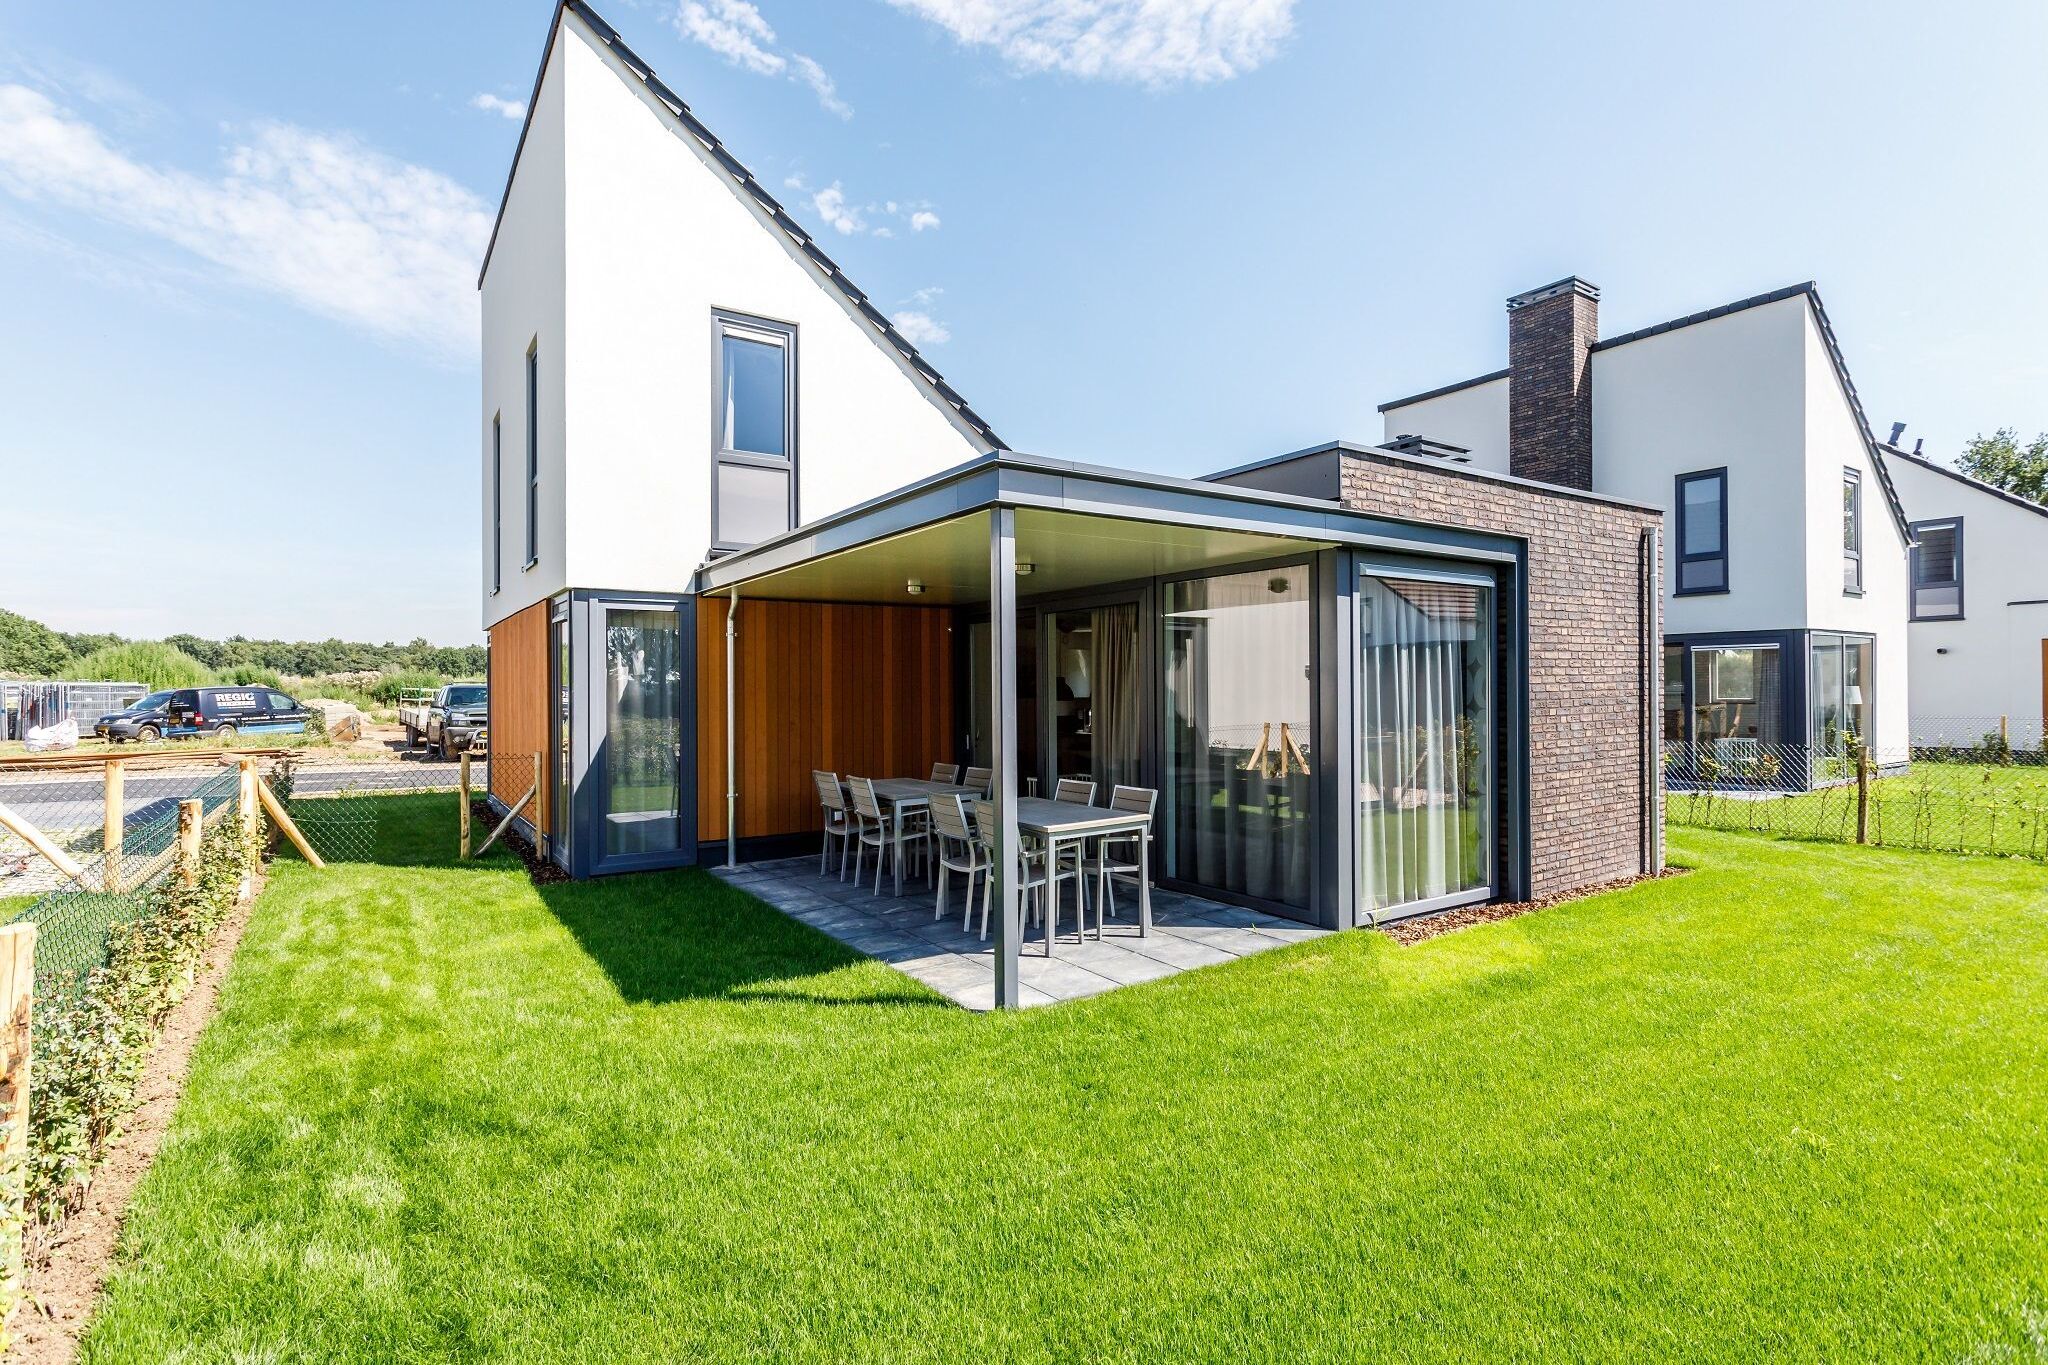 Modern and child-friendly Villa in Limburg